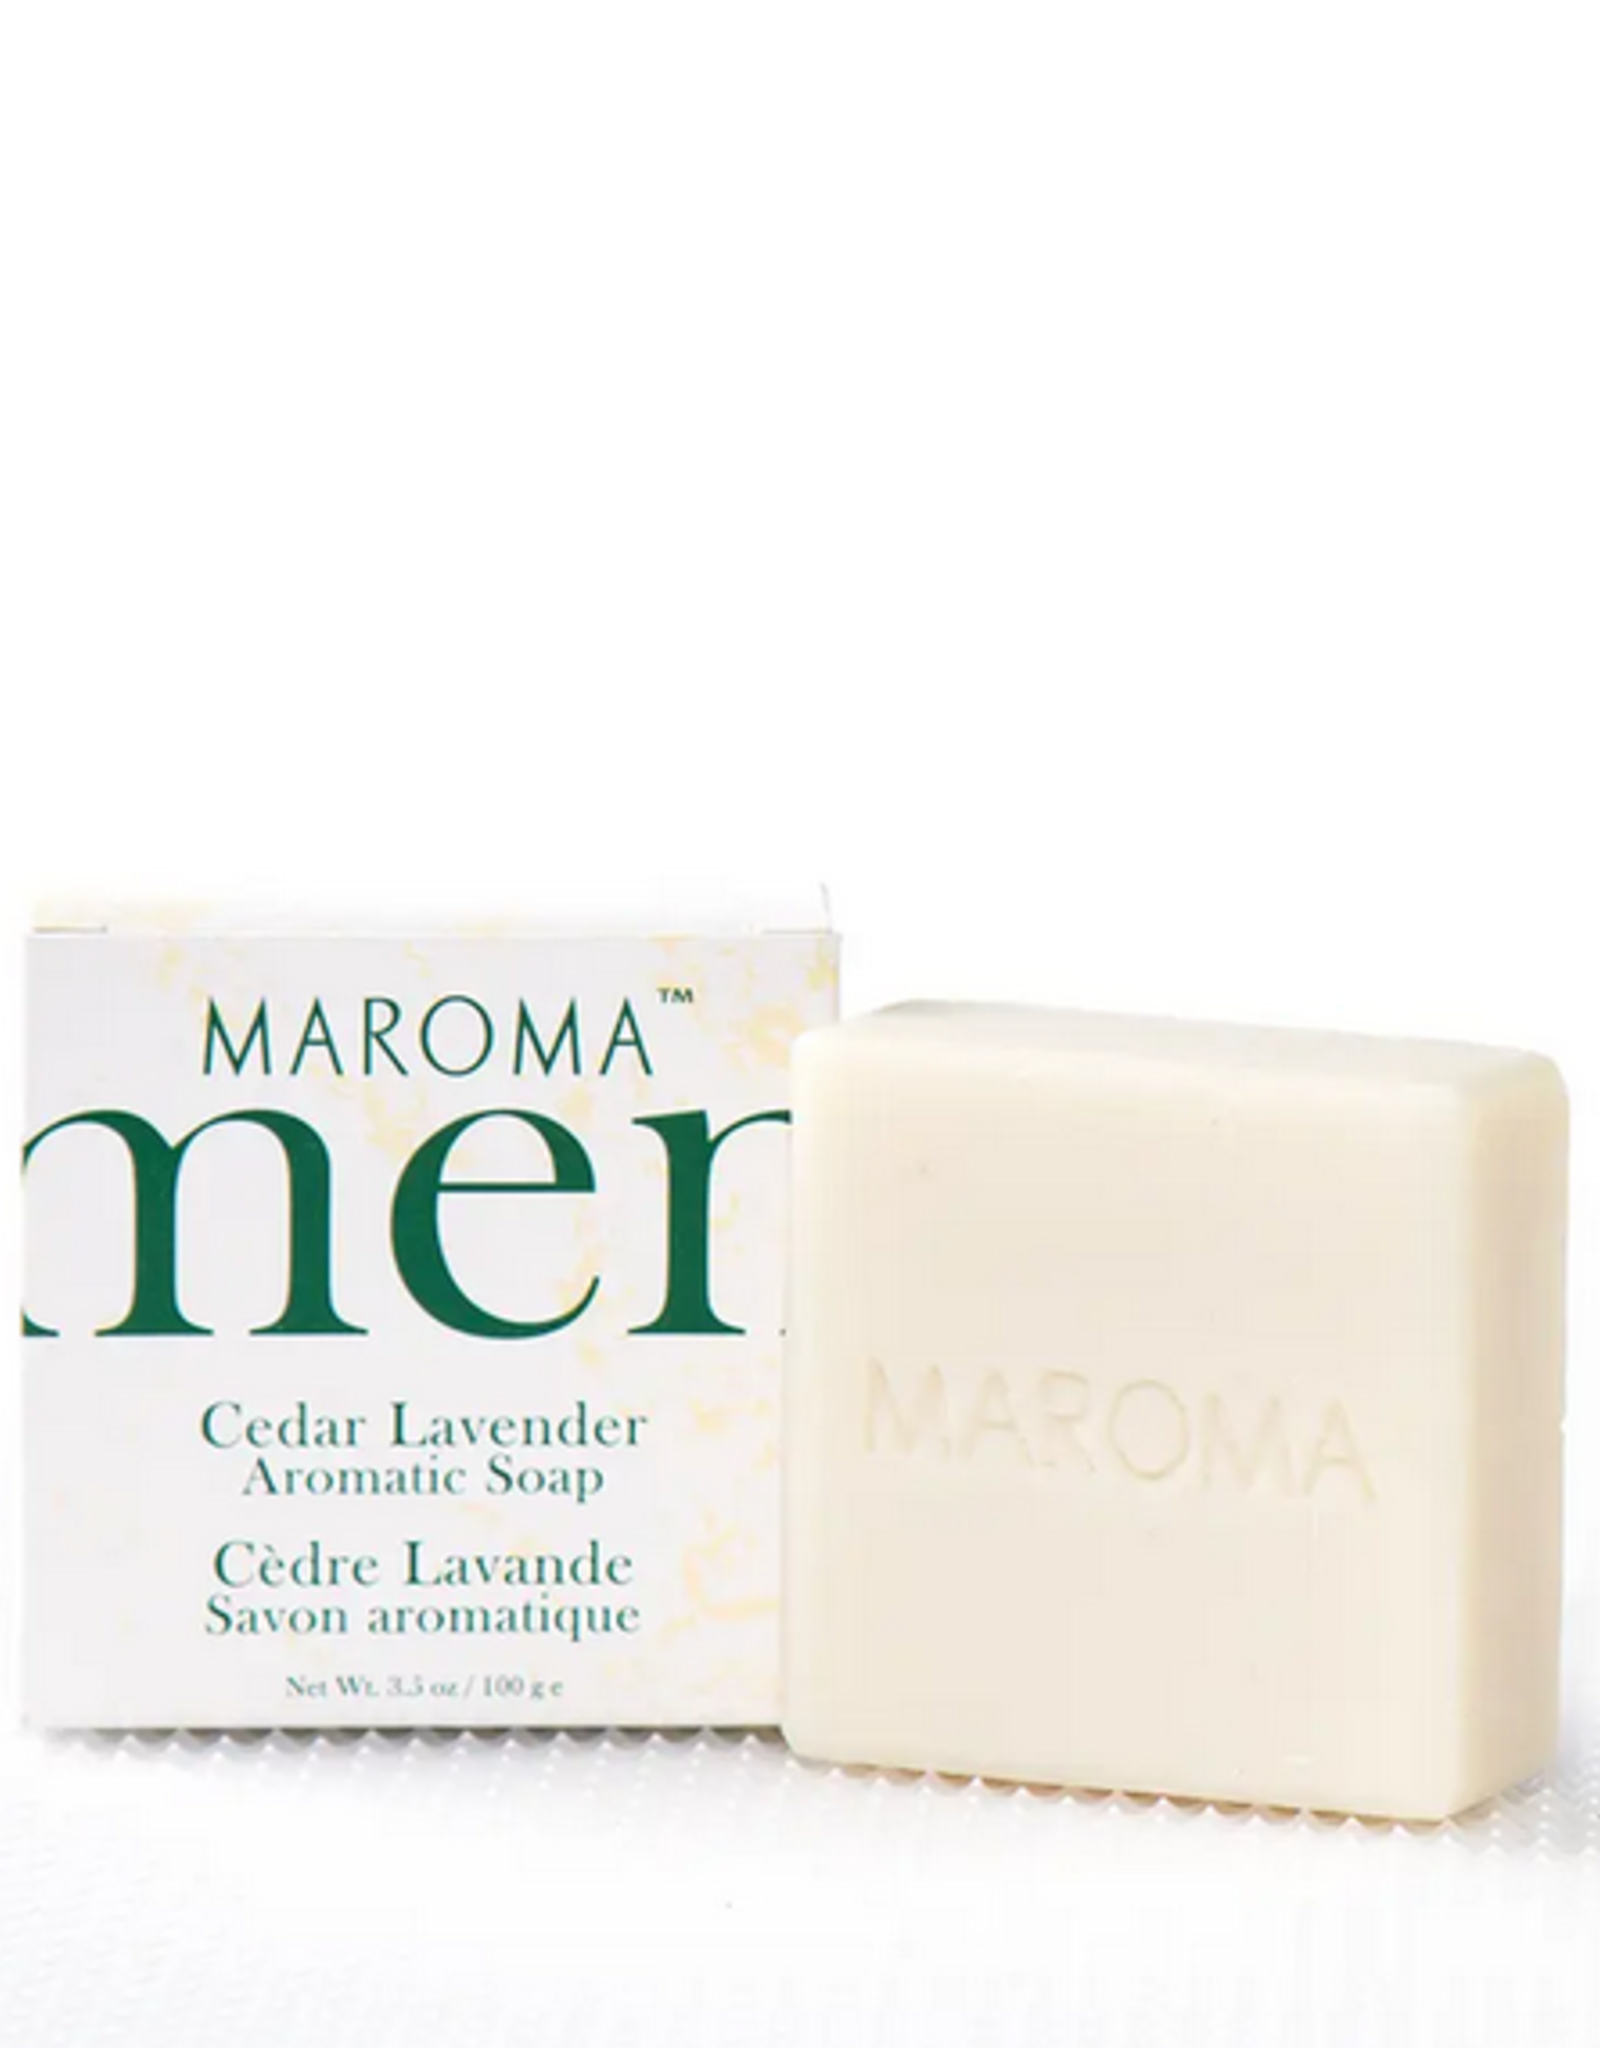 Maroma Cedar Lavender Face & Body Soap